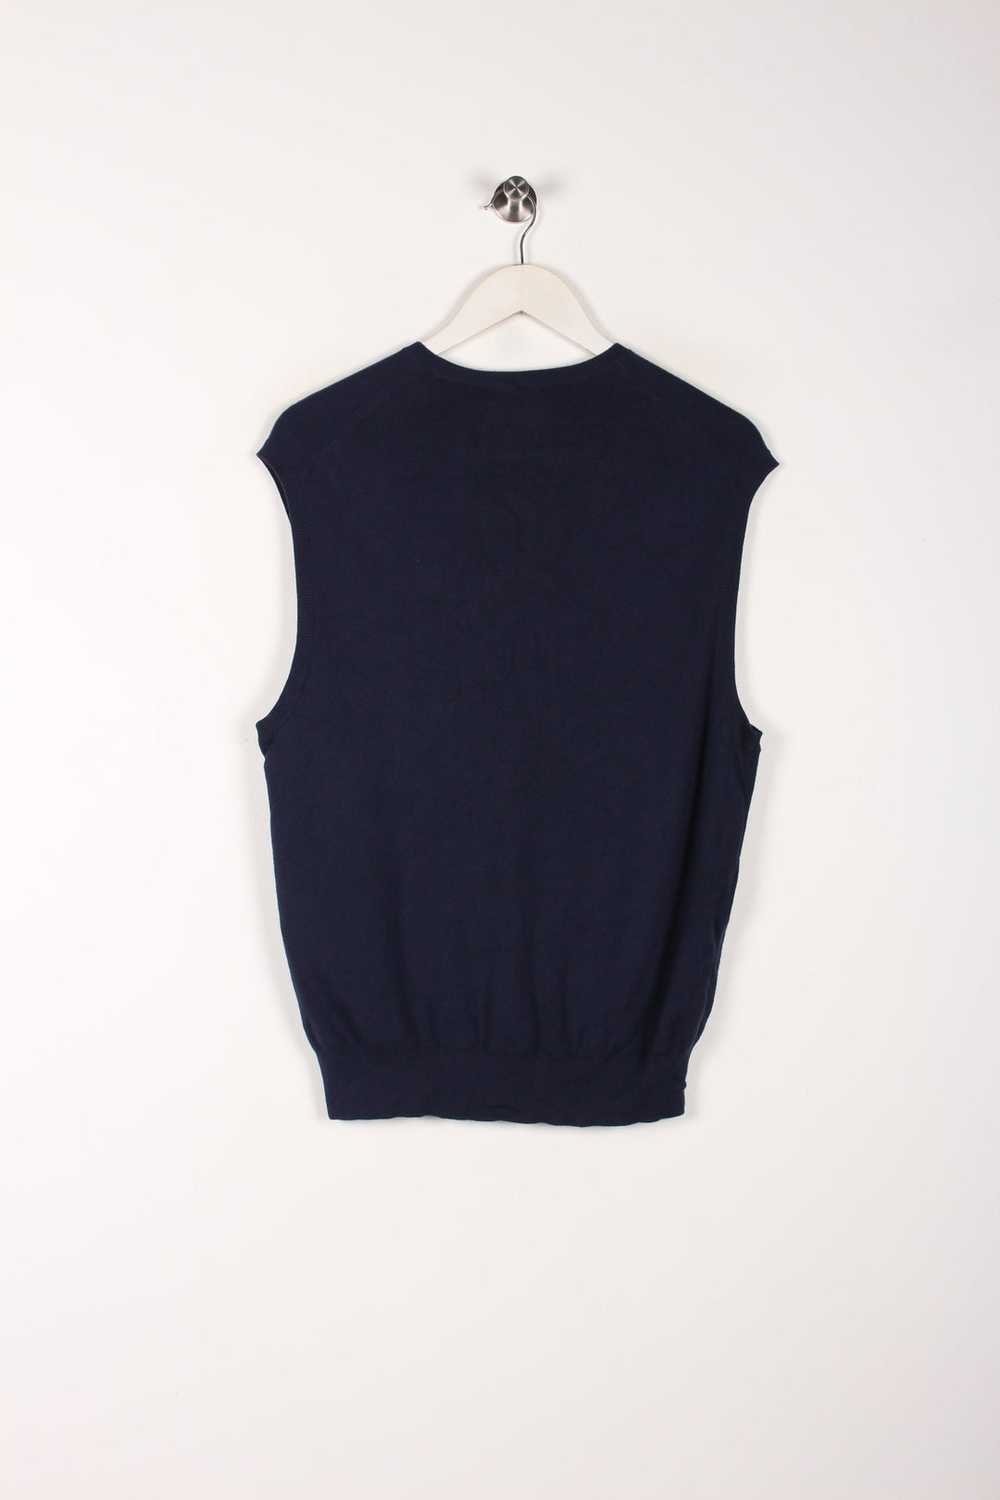 90's Ralph Lauren Knitted Vest Large - image 3